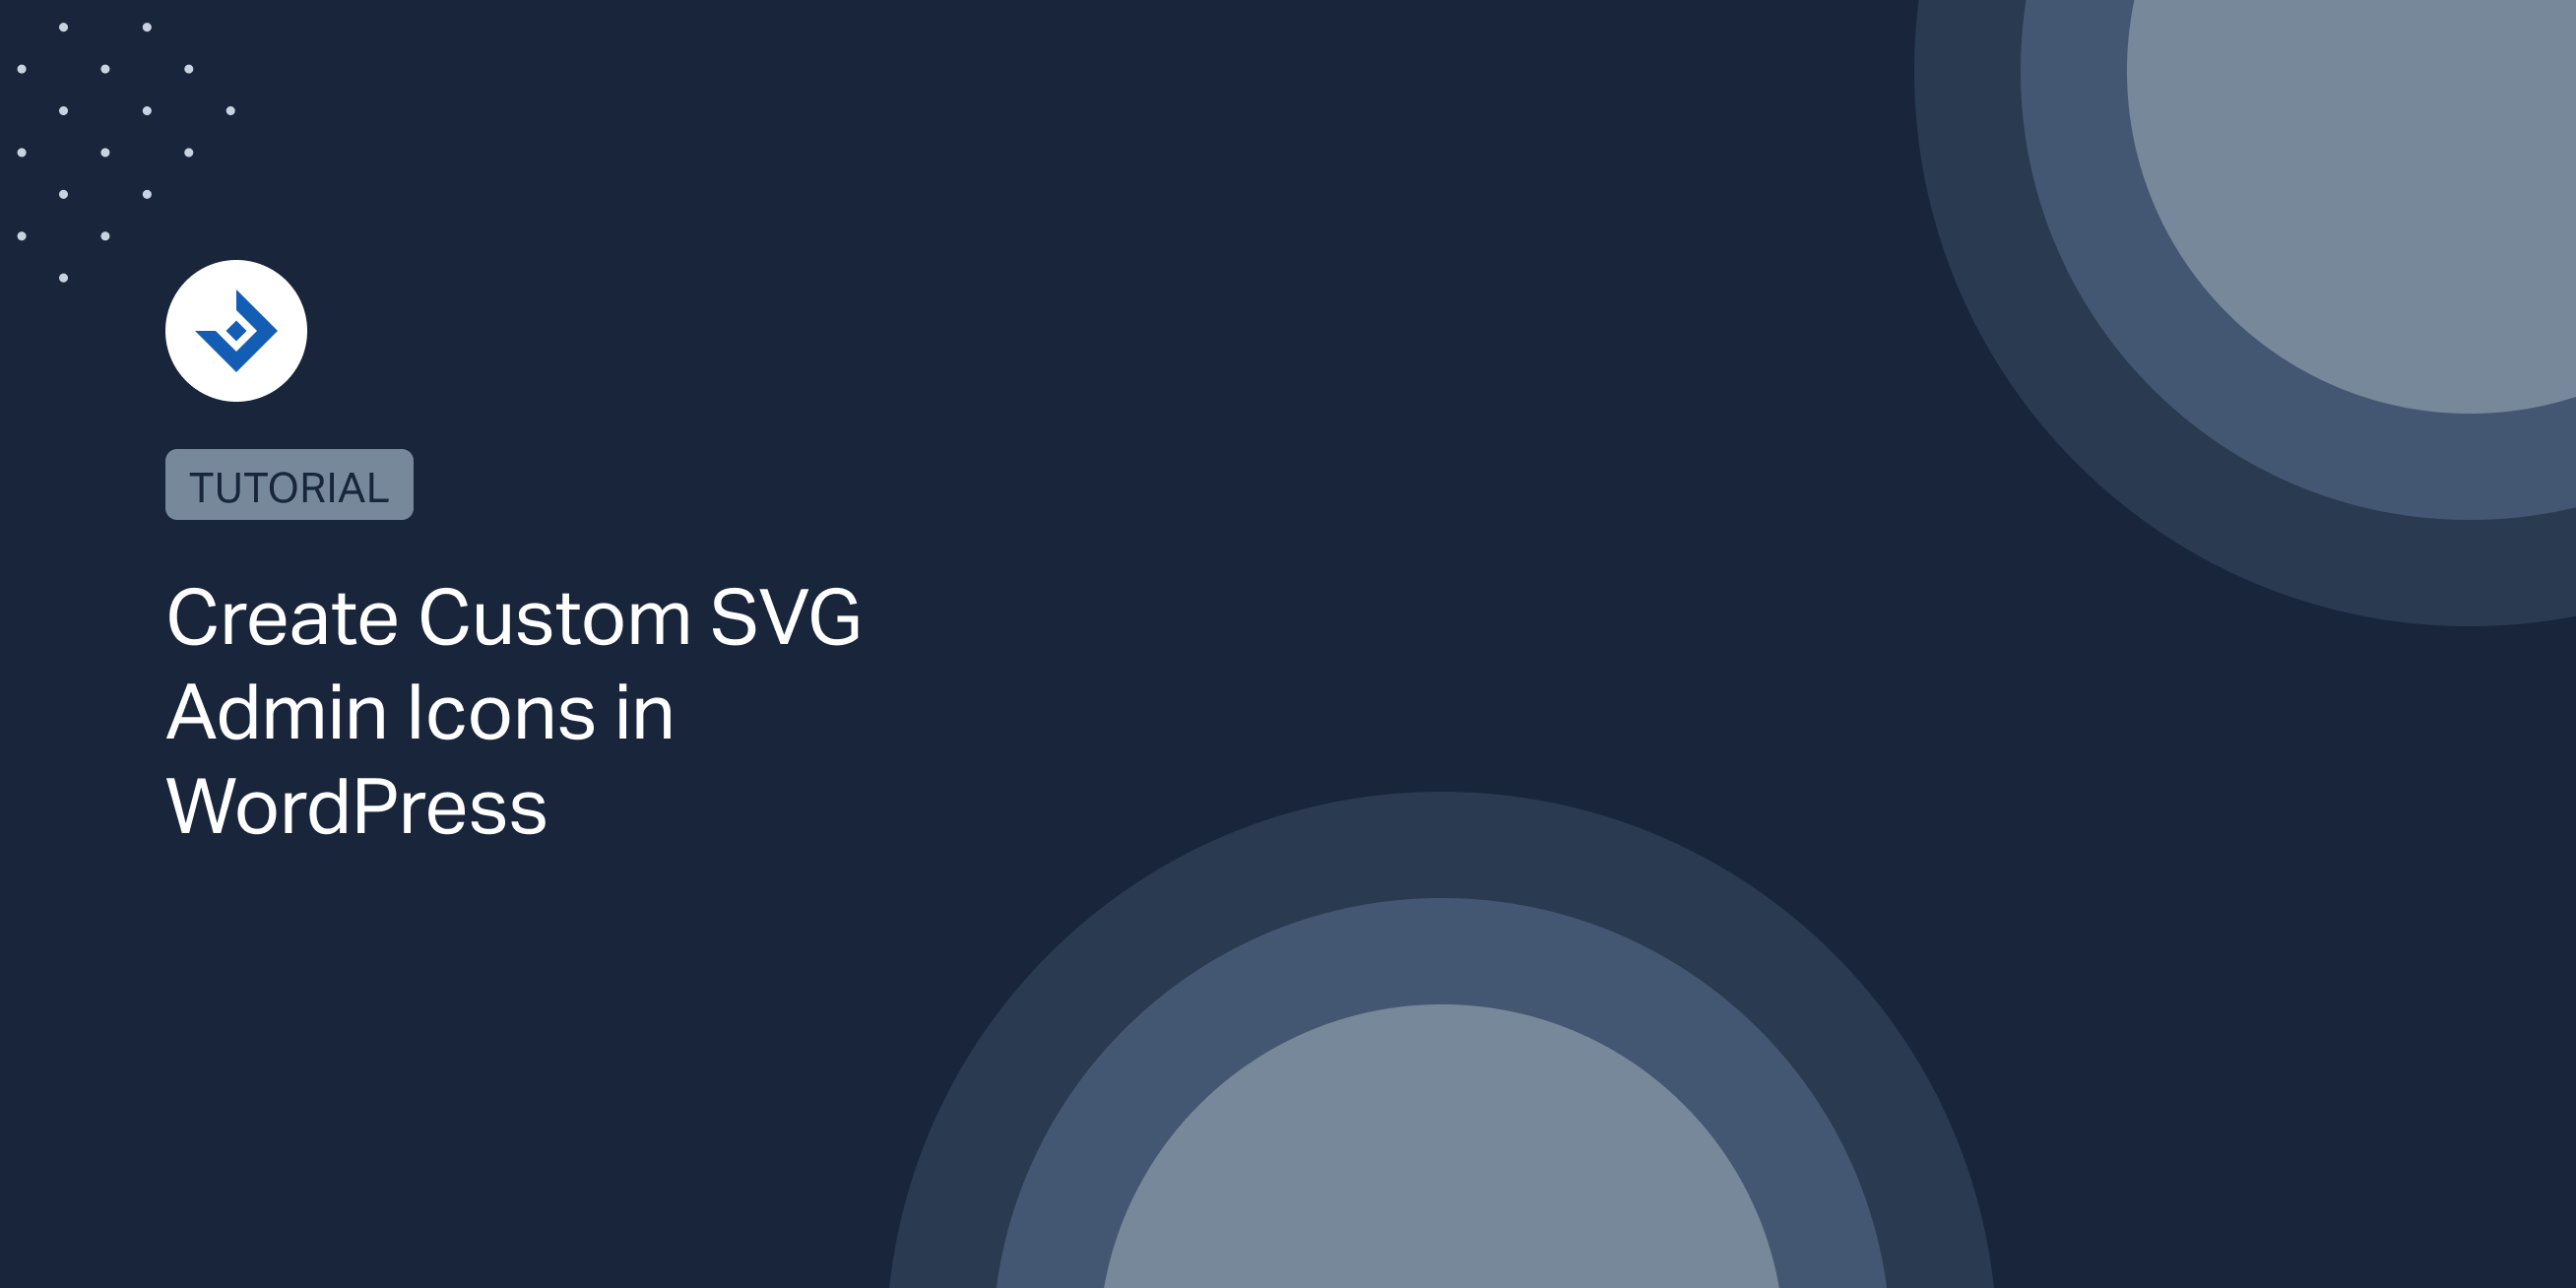 Create Custom SVG Admin Icons in WordPress